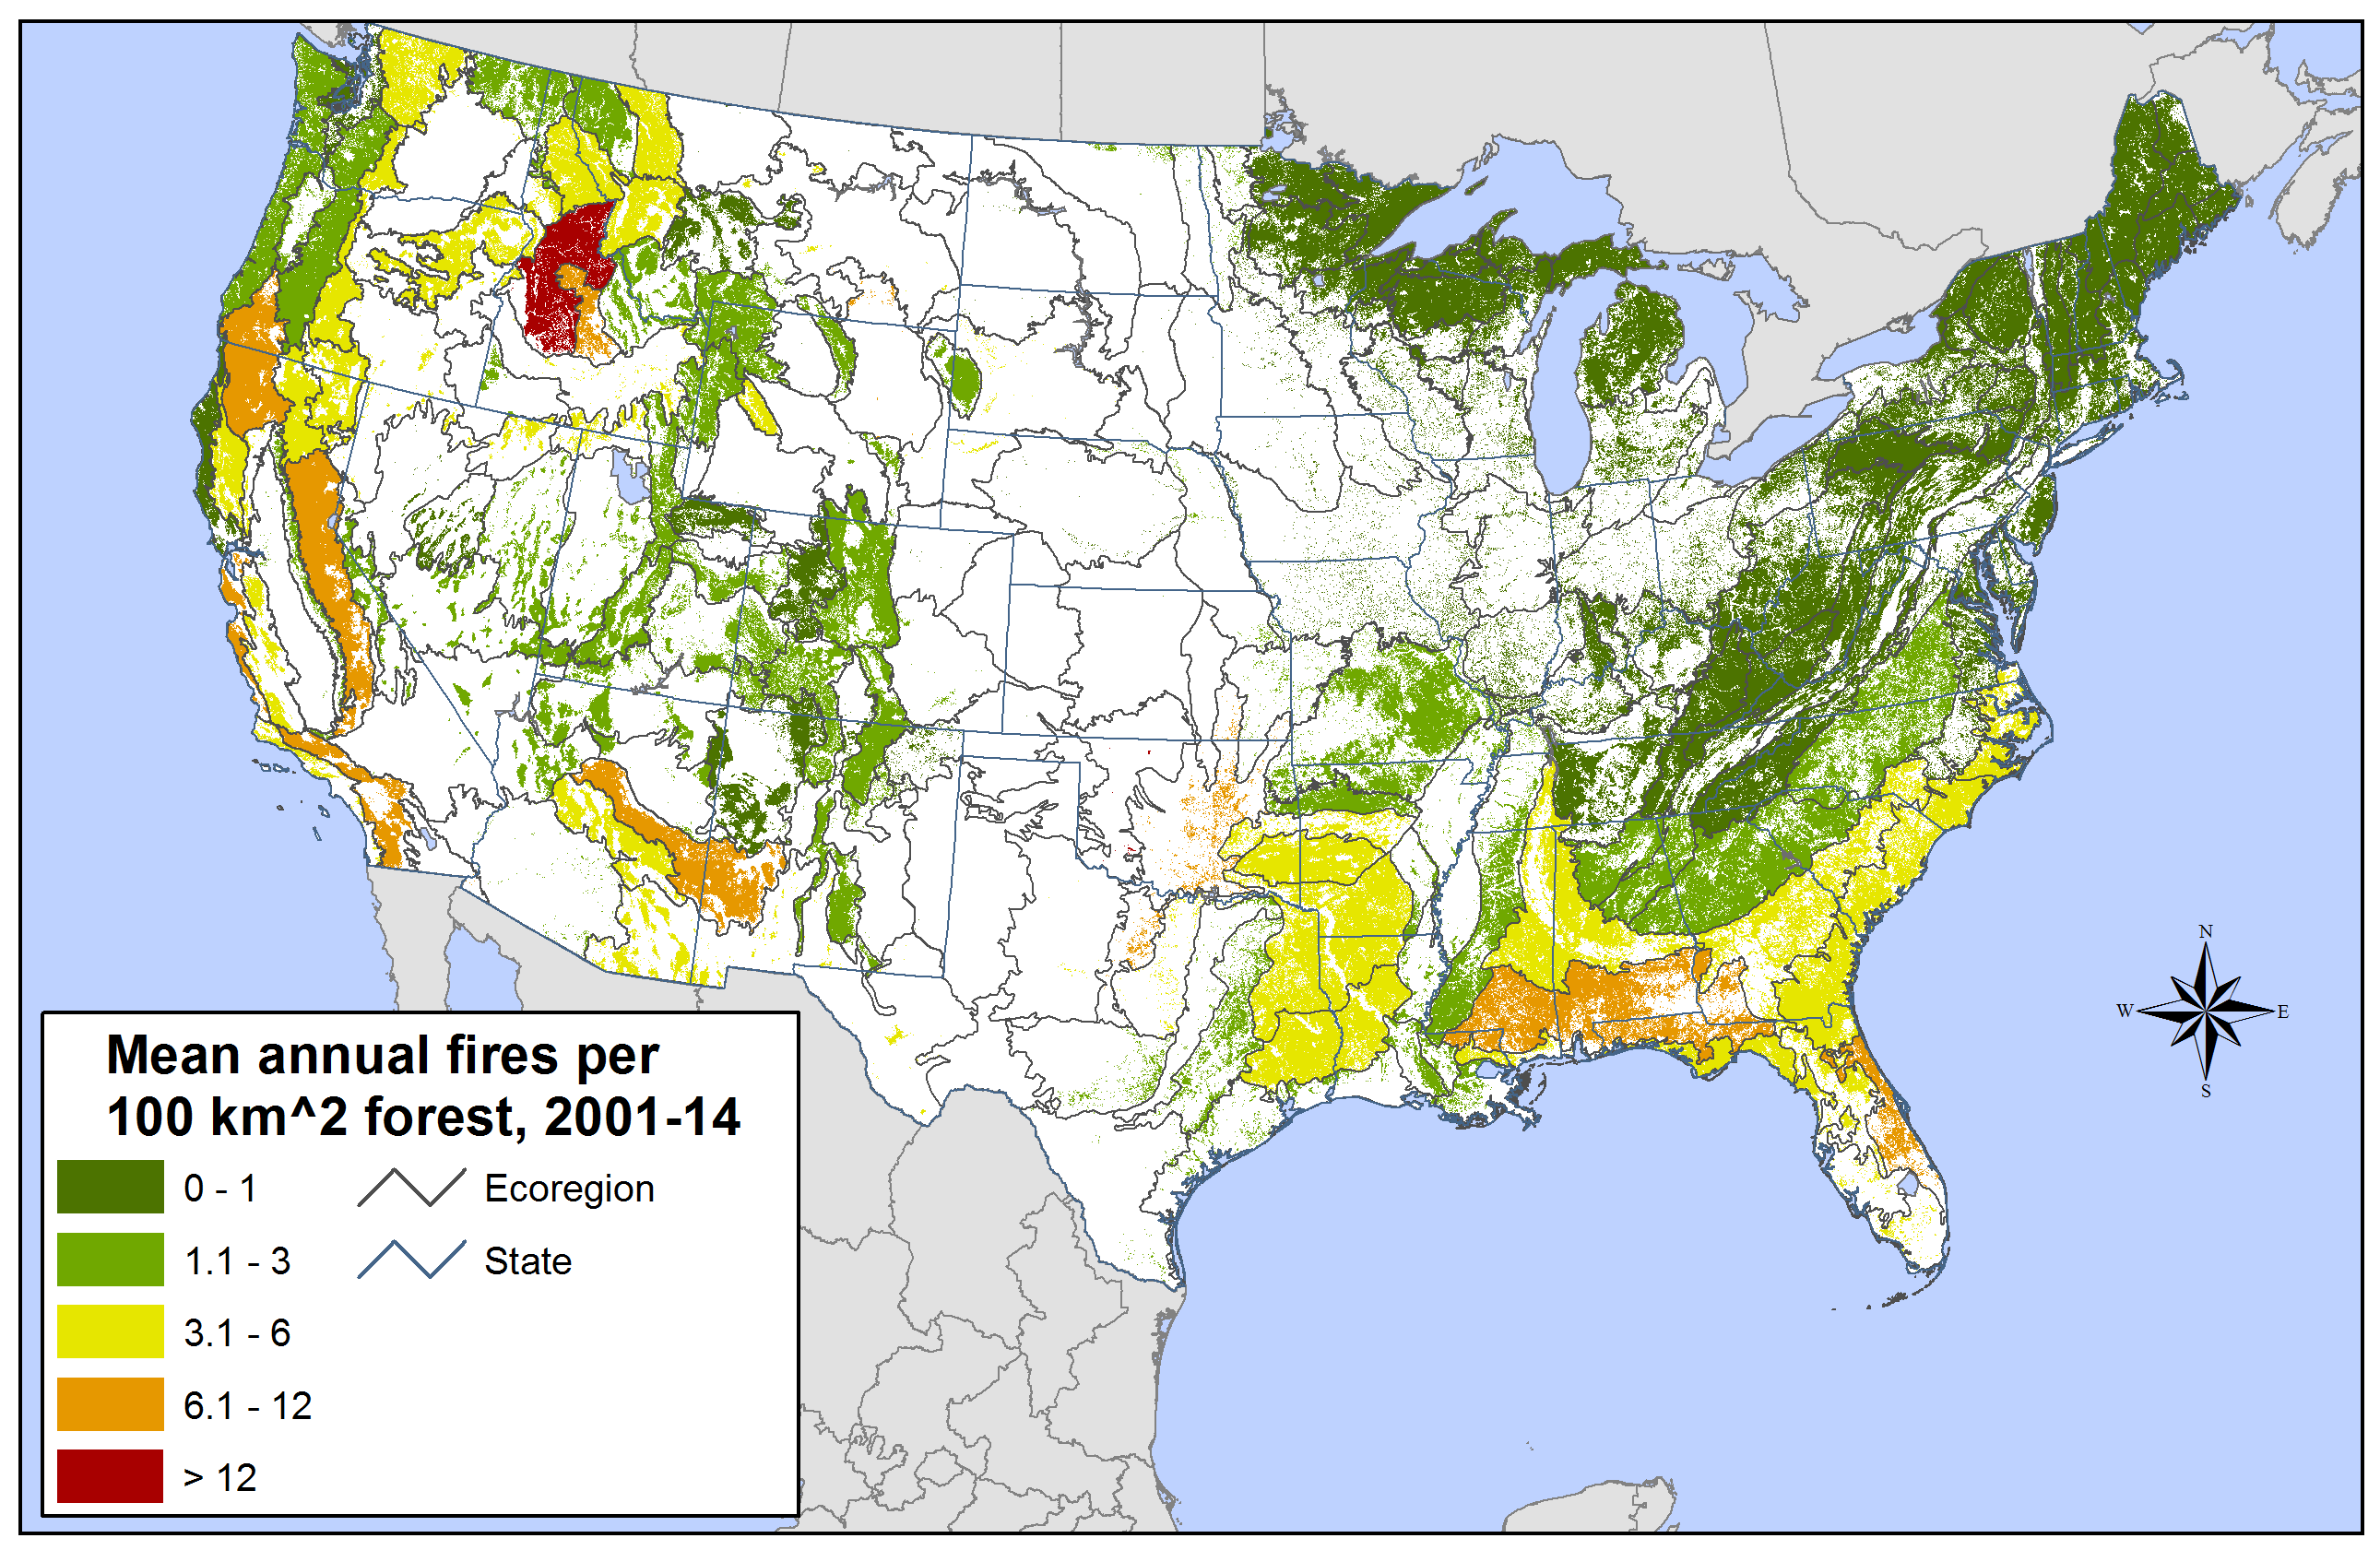 ecoregion fire occurrence, 2001-2014